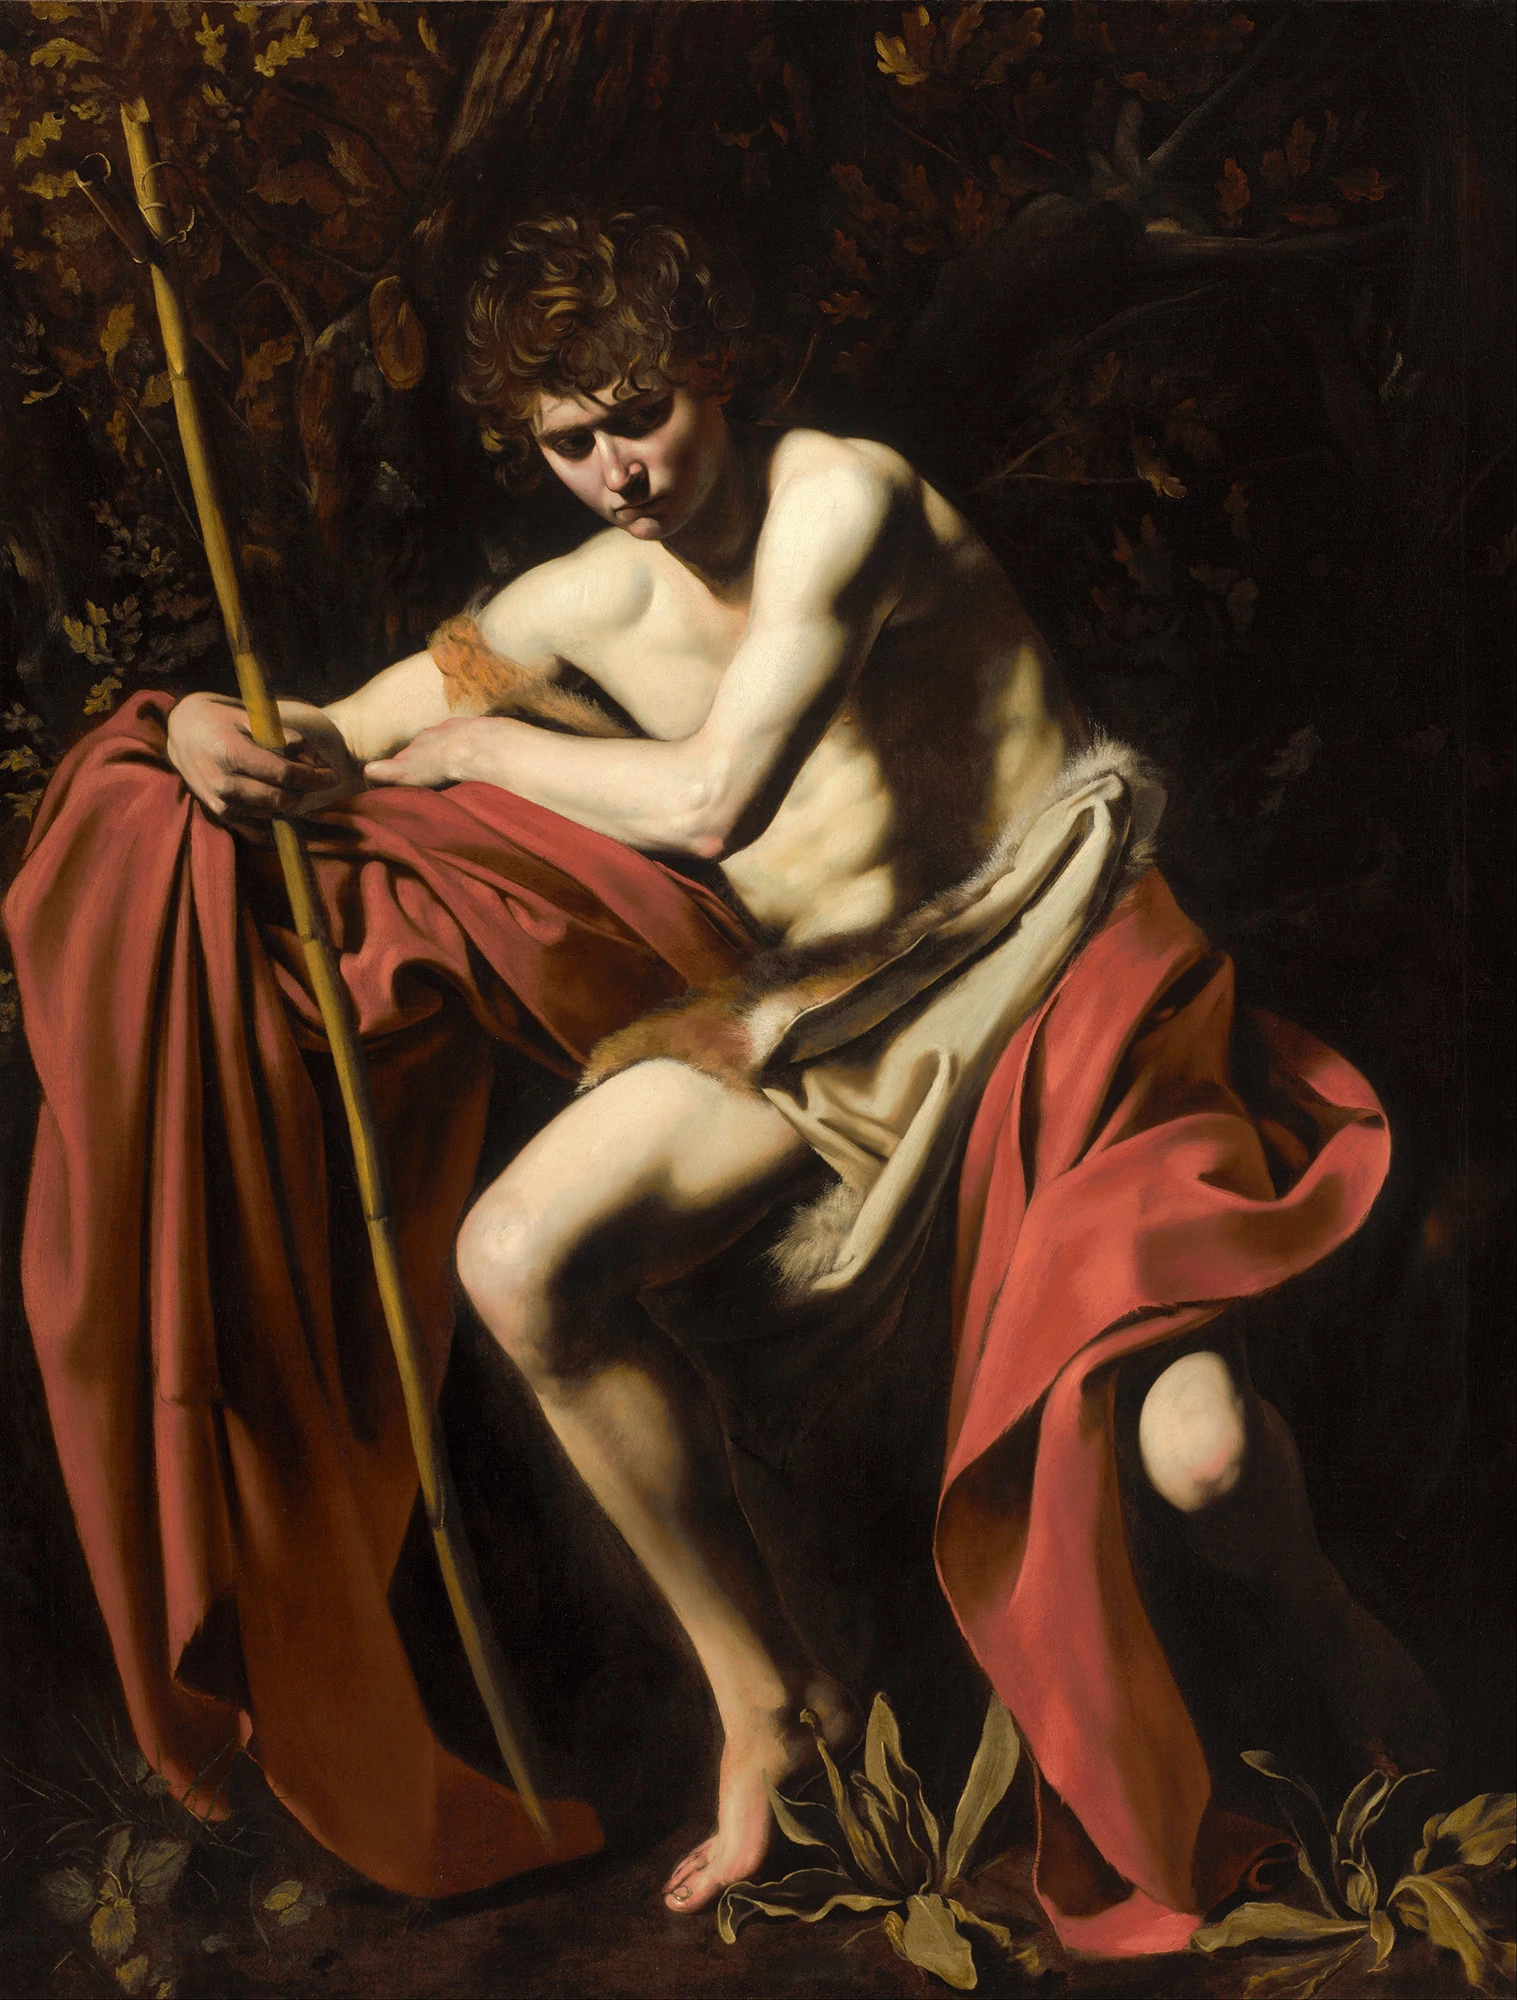 Caravaggio, The Artists